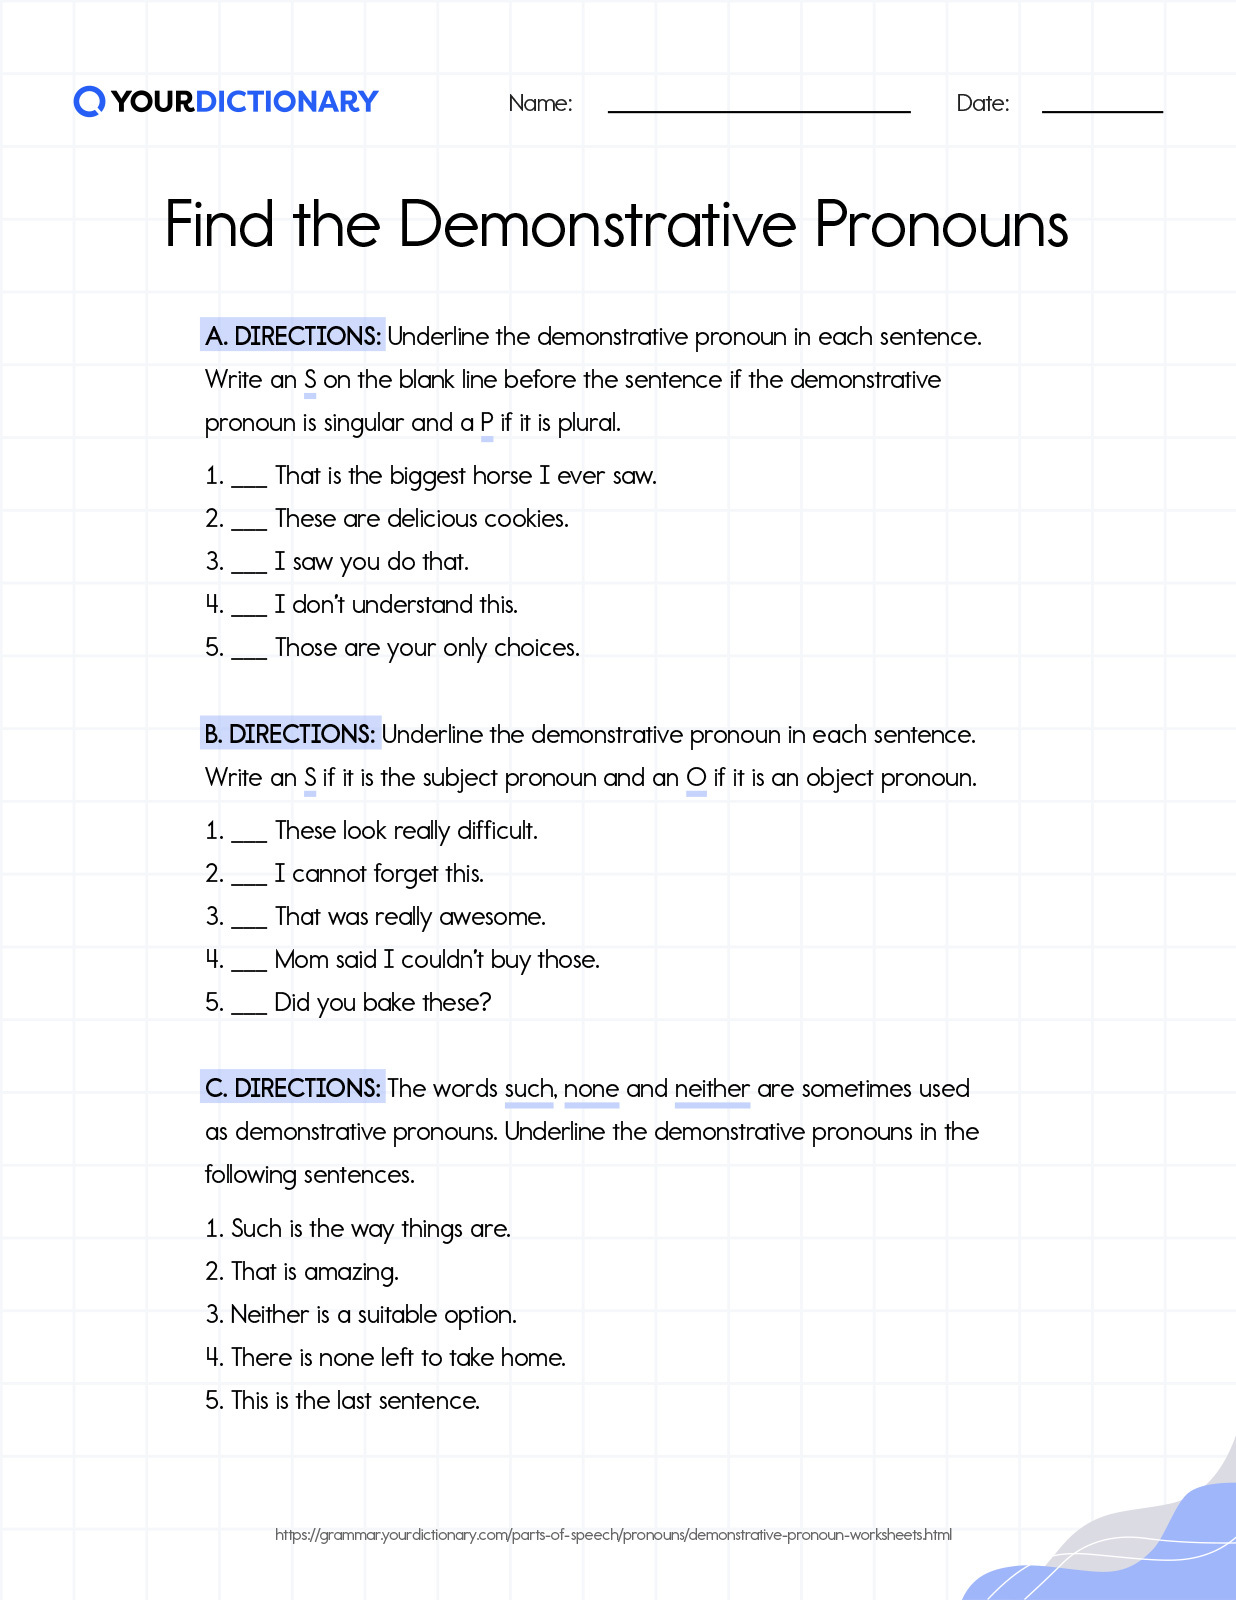 Find the demonstrative pronouns worksheet